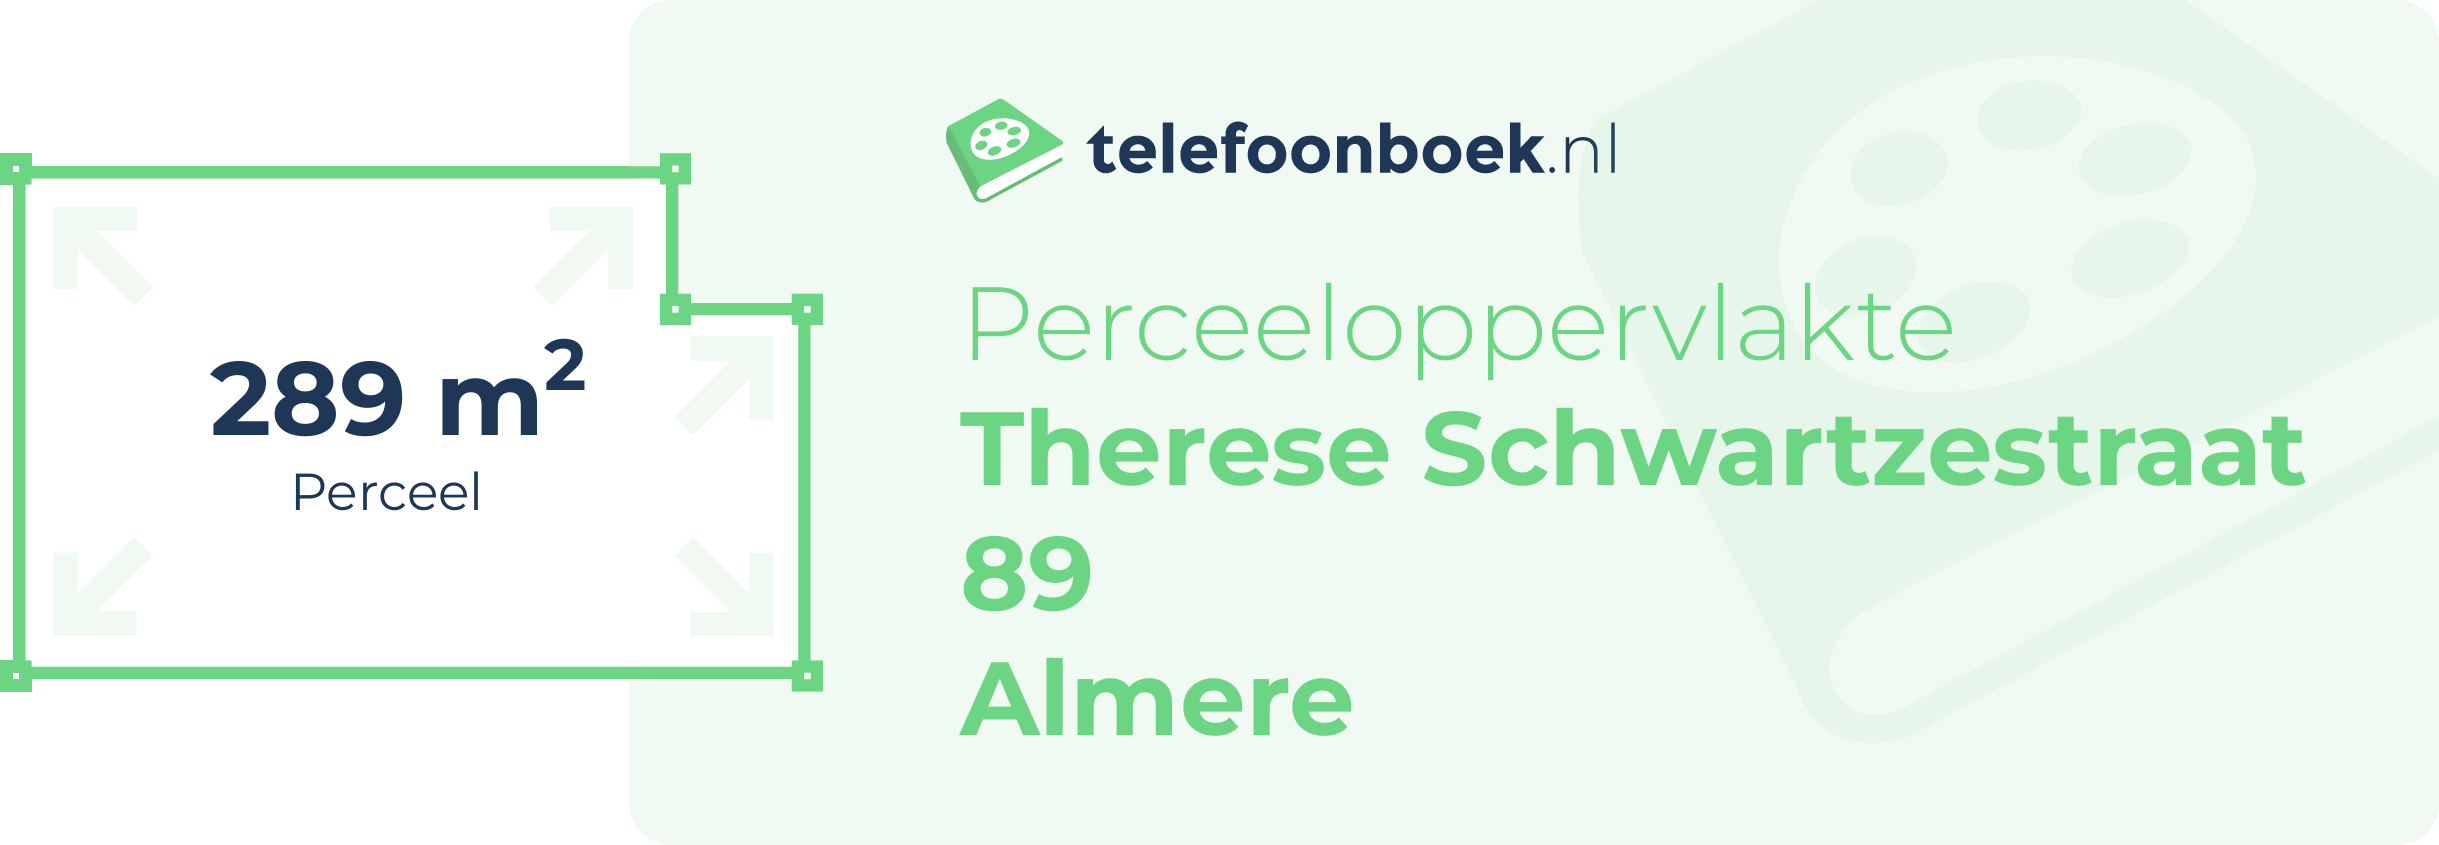 Perceeloppervlakte Therese Schwartzestraat 89 Almere